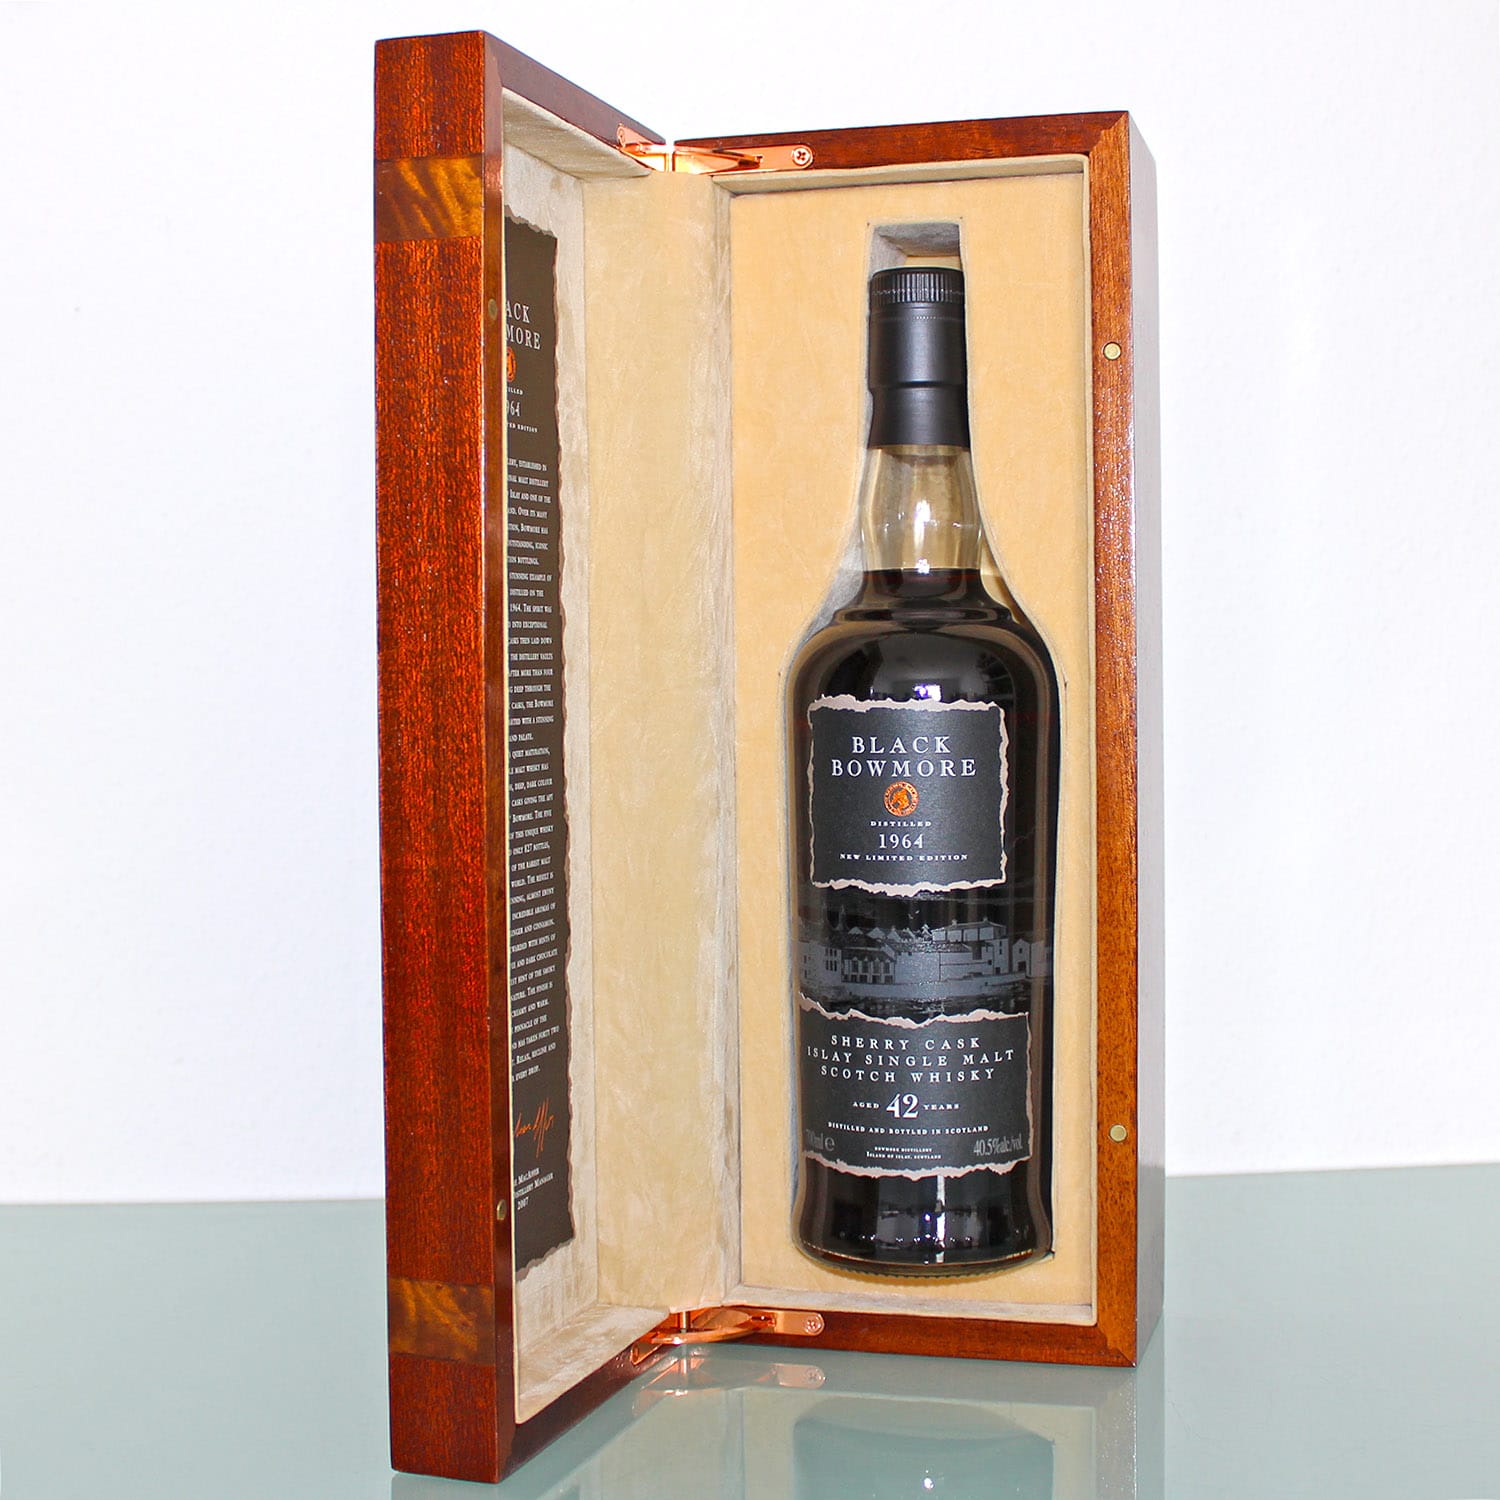 Black Bowmore 1964 42 Years Old box